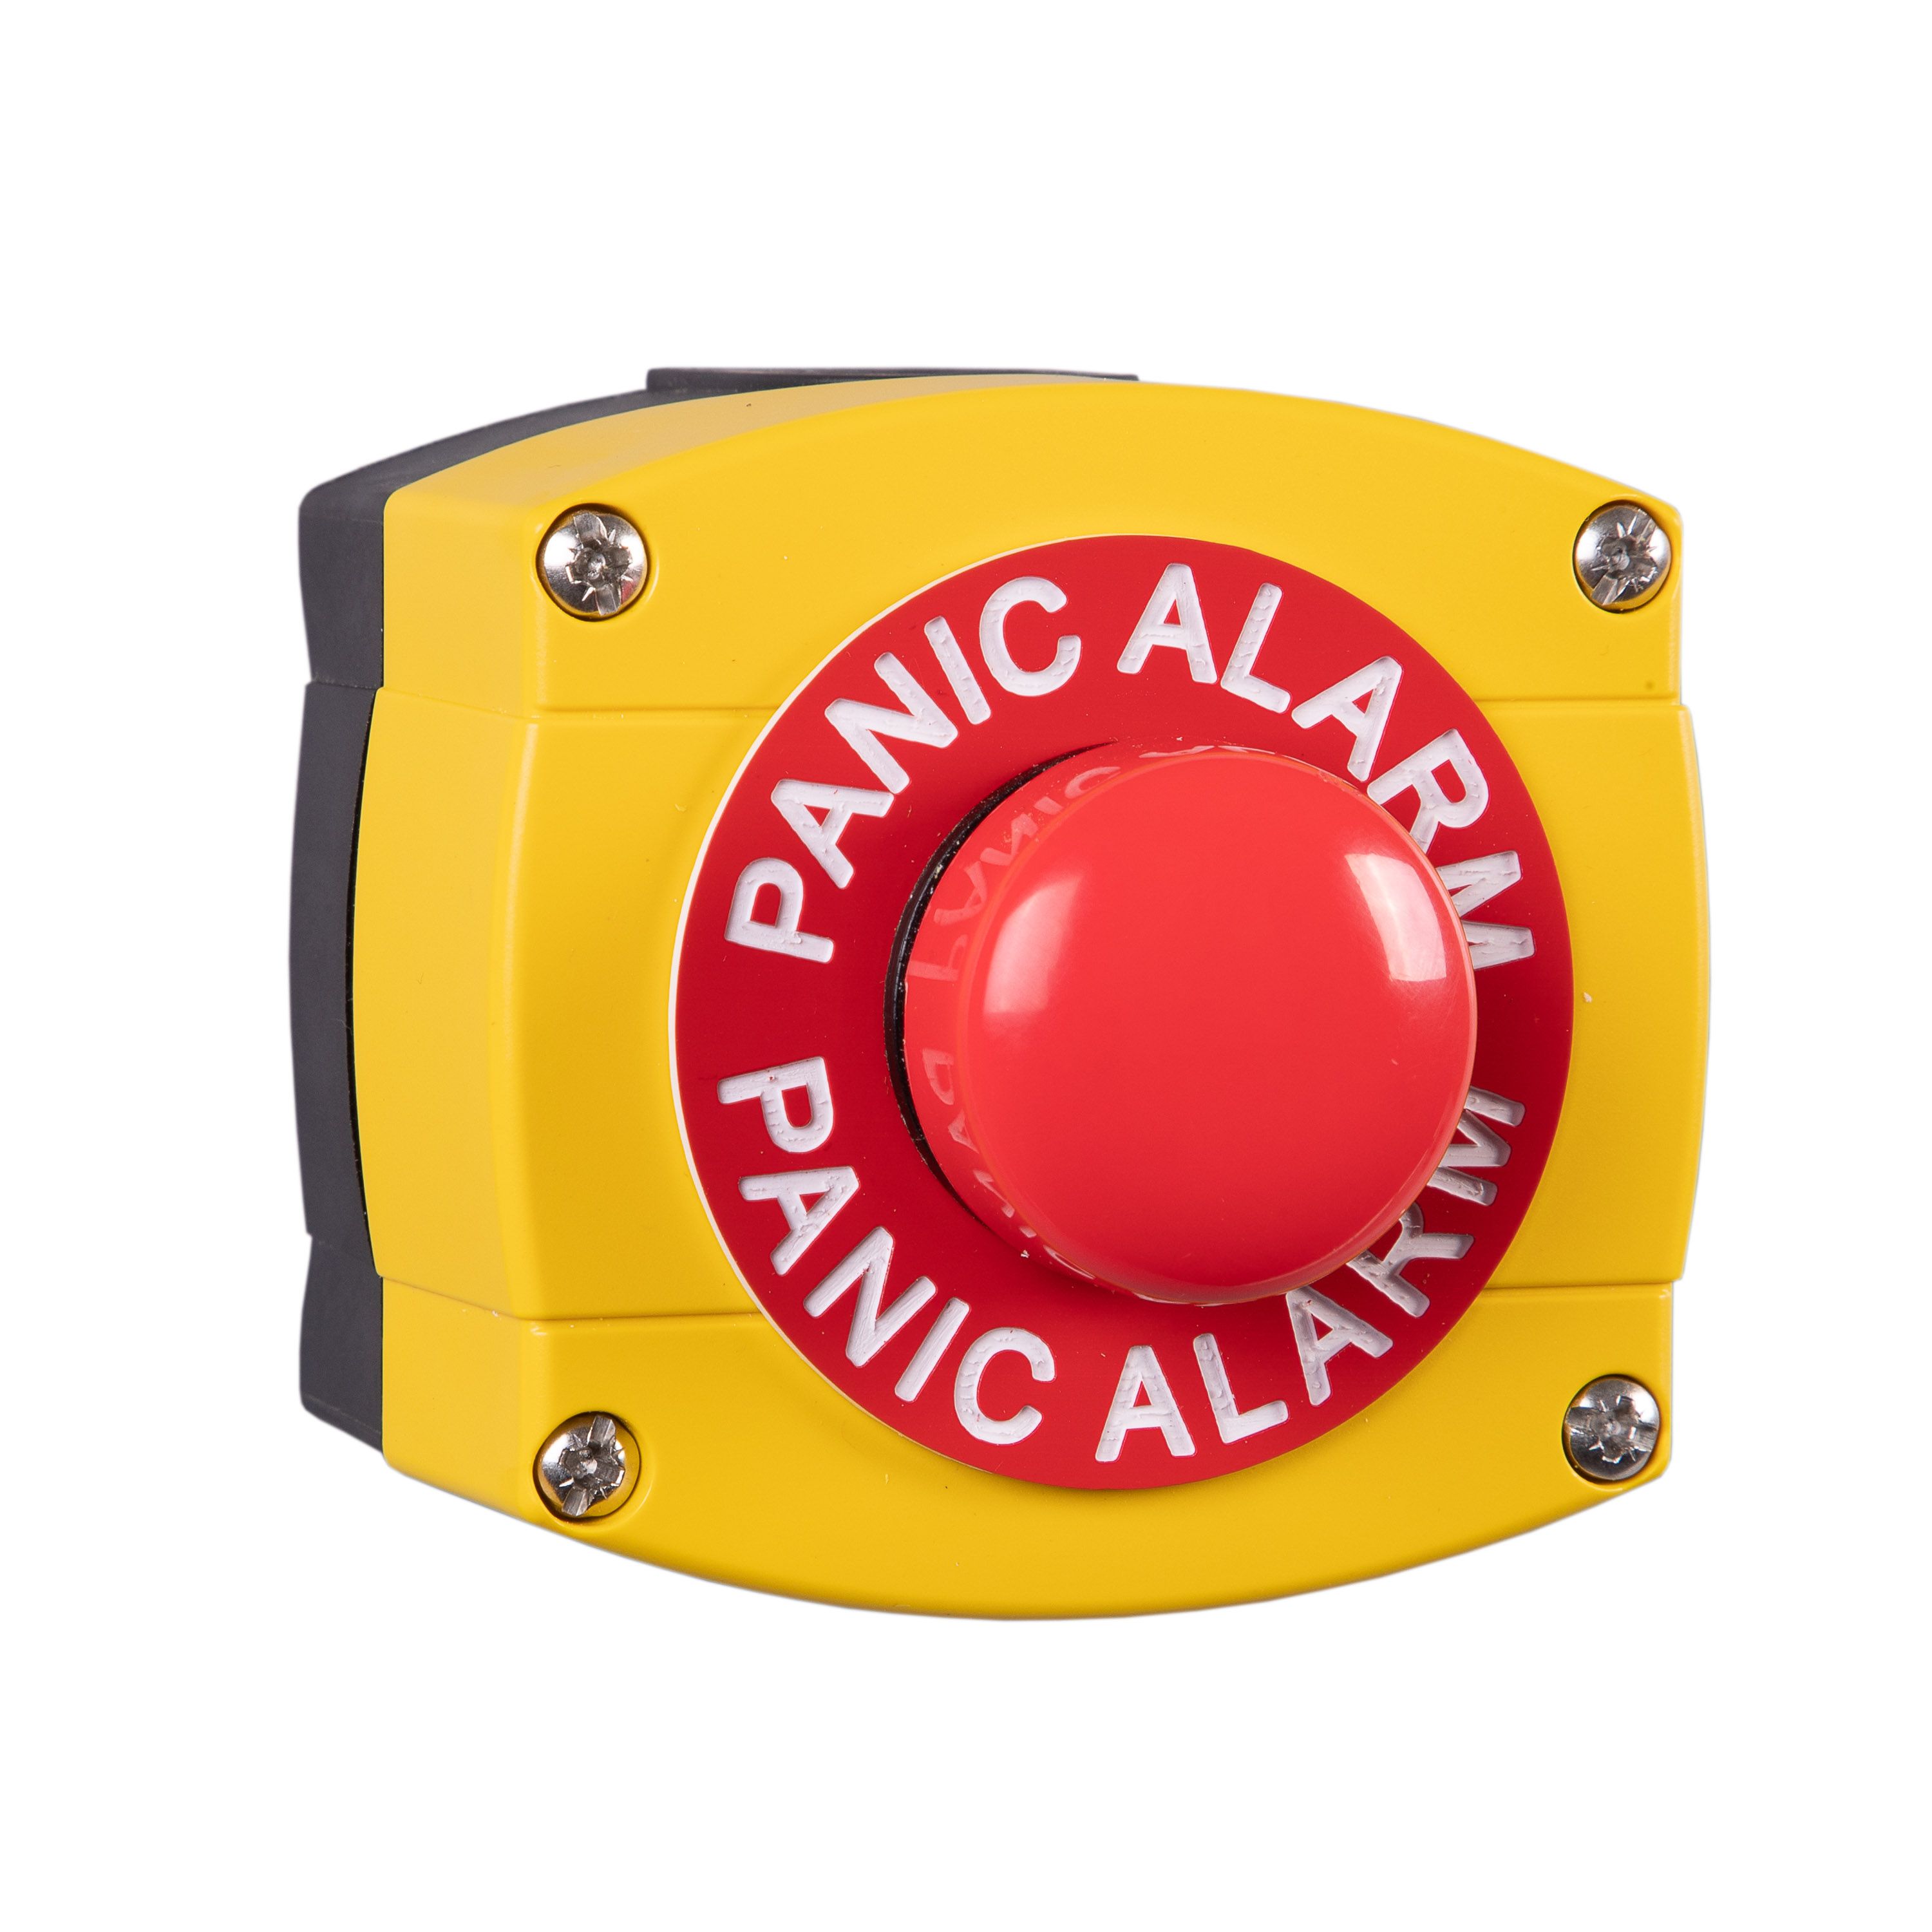 Красная кнопка сигнализации. Кнопка Alarm. Кнопка Panic button. Красная кнопка Alarm. Красная кнопка на желтом корпусе.